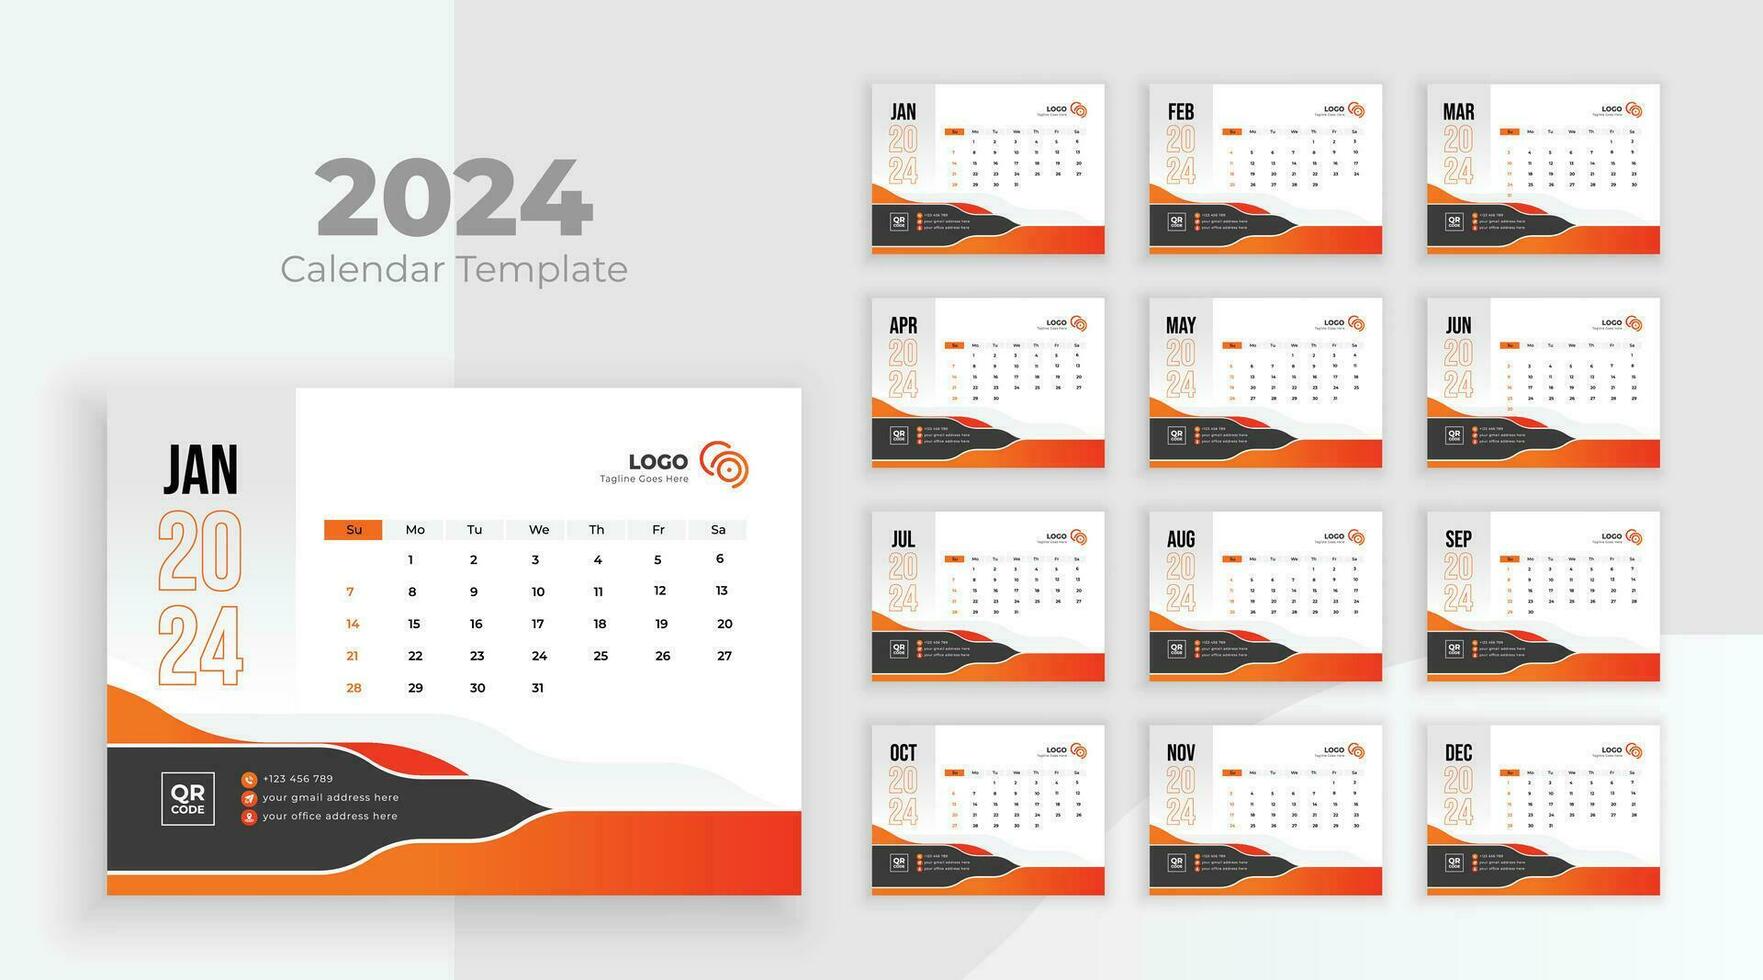 calendario modelo para 2024 año. semana comienzo en domingo. minimalista escritorio calendario 2024 plantilla, planificador, negocio modelo vector